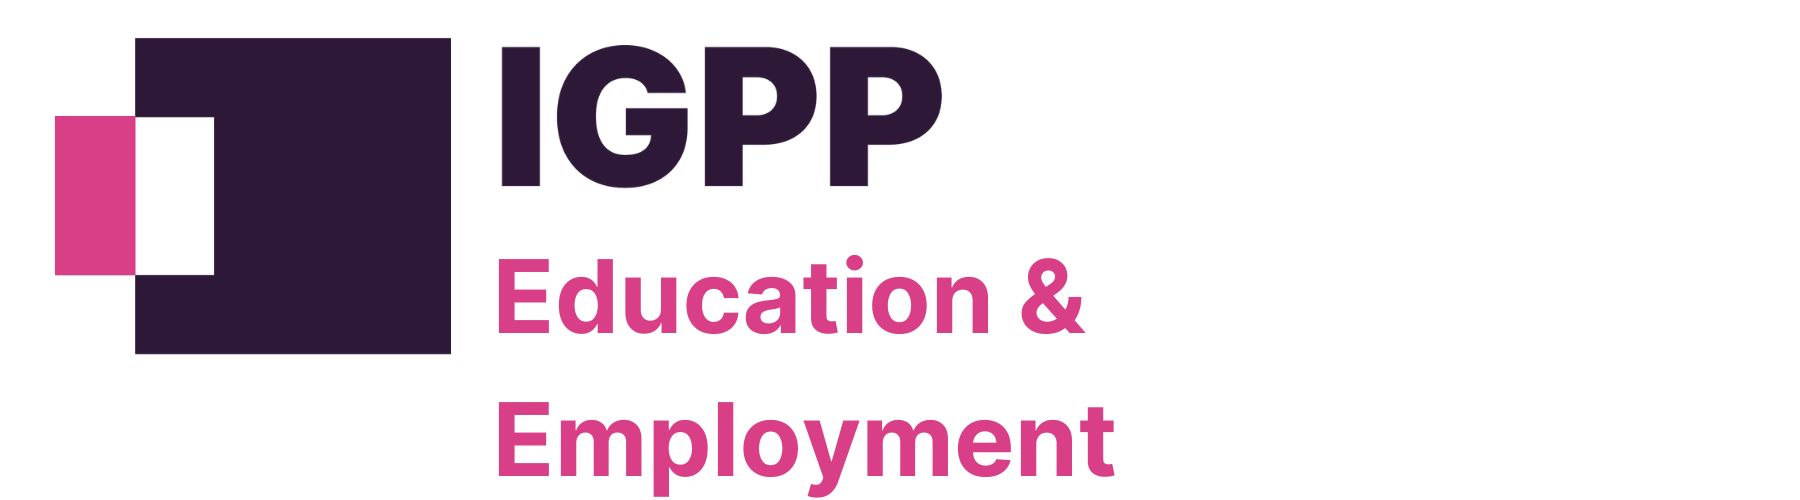 IGPP Education sub brand logo